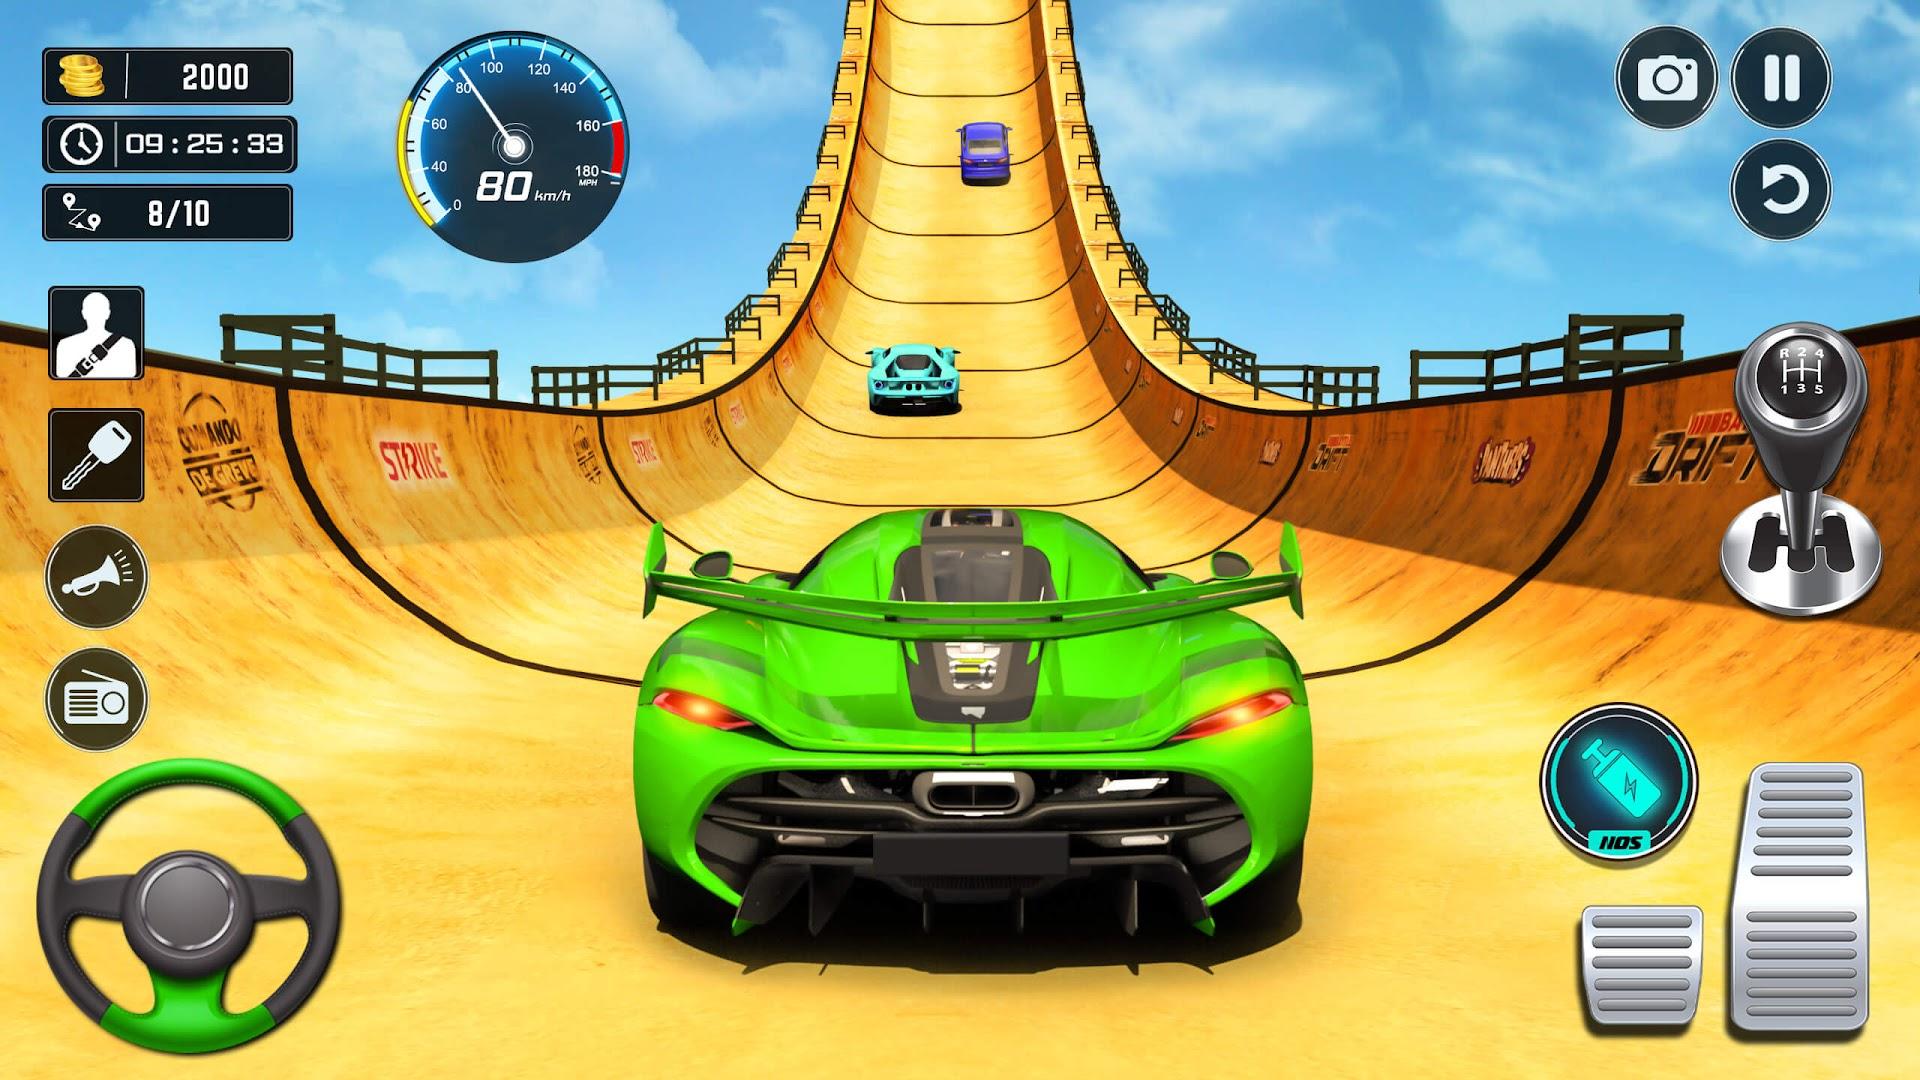 Screenshot 1 of Permainan Mobil Ramp GT Car Stunts 3D 1.9.2